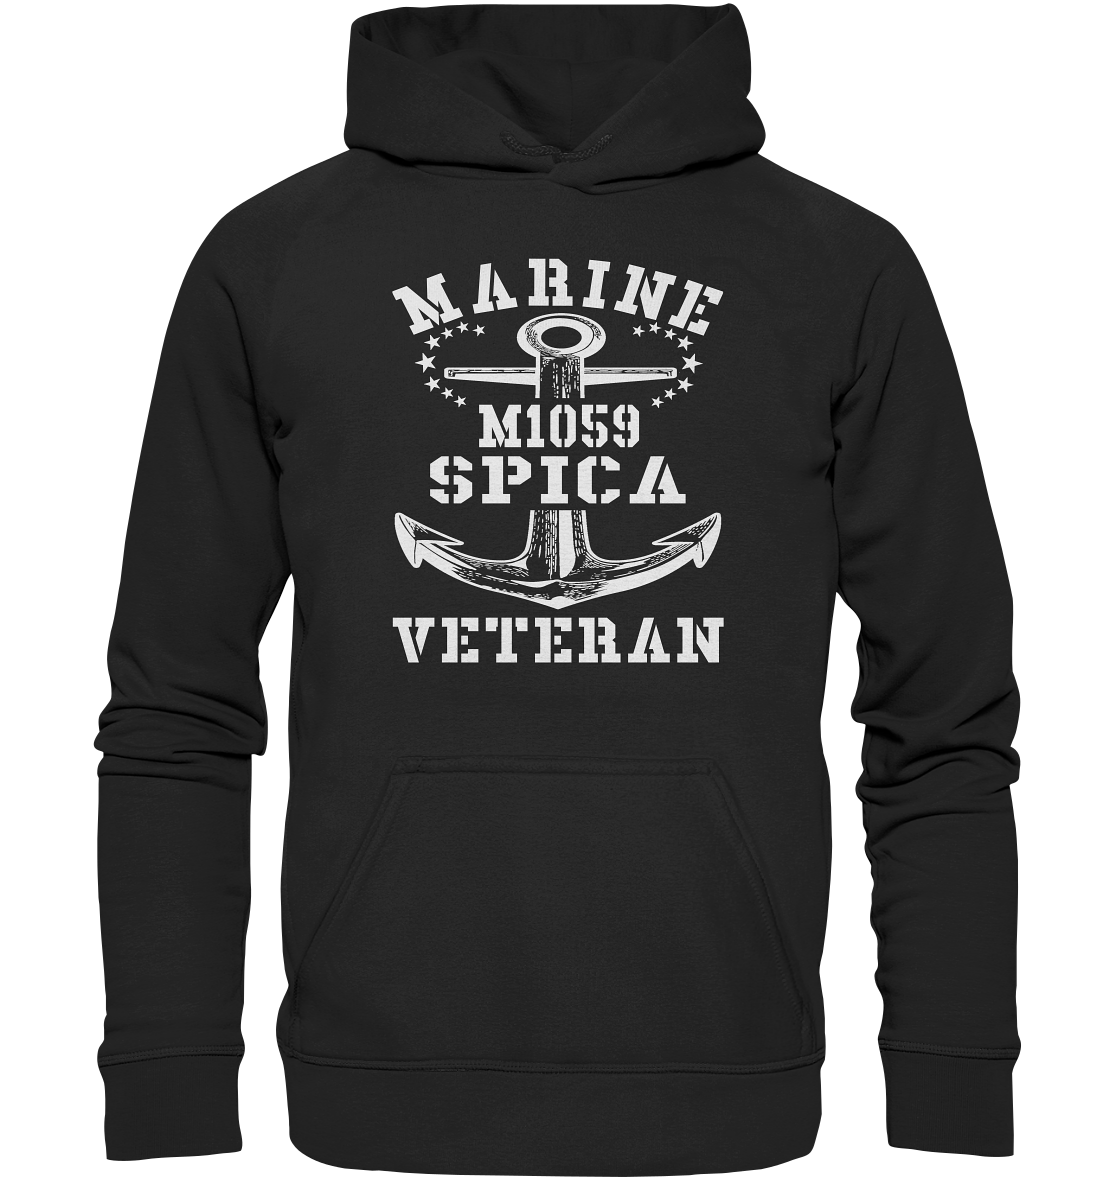 SM-Boot M1059 SPICA Marine Veteran - Basic Unisex Hoodie